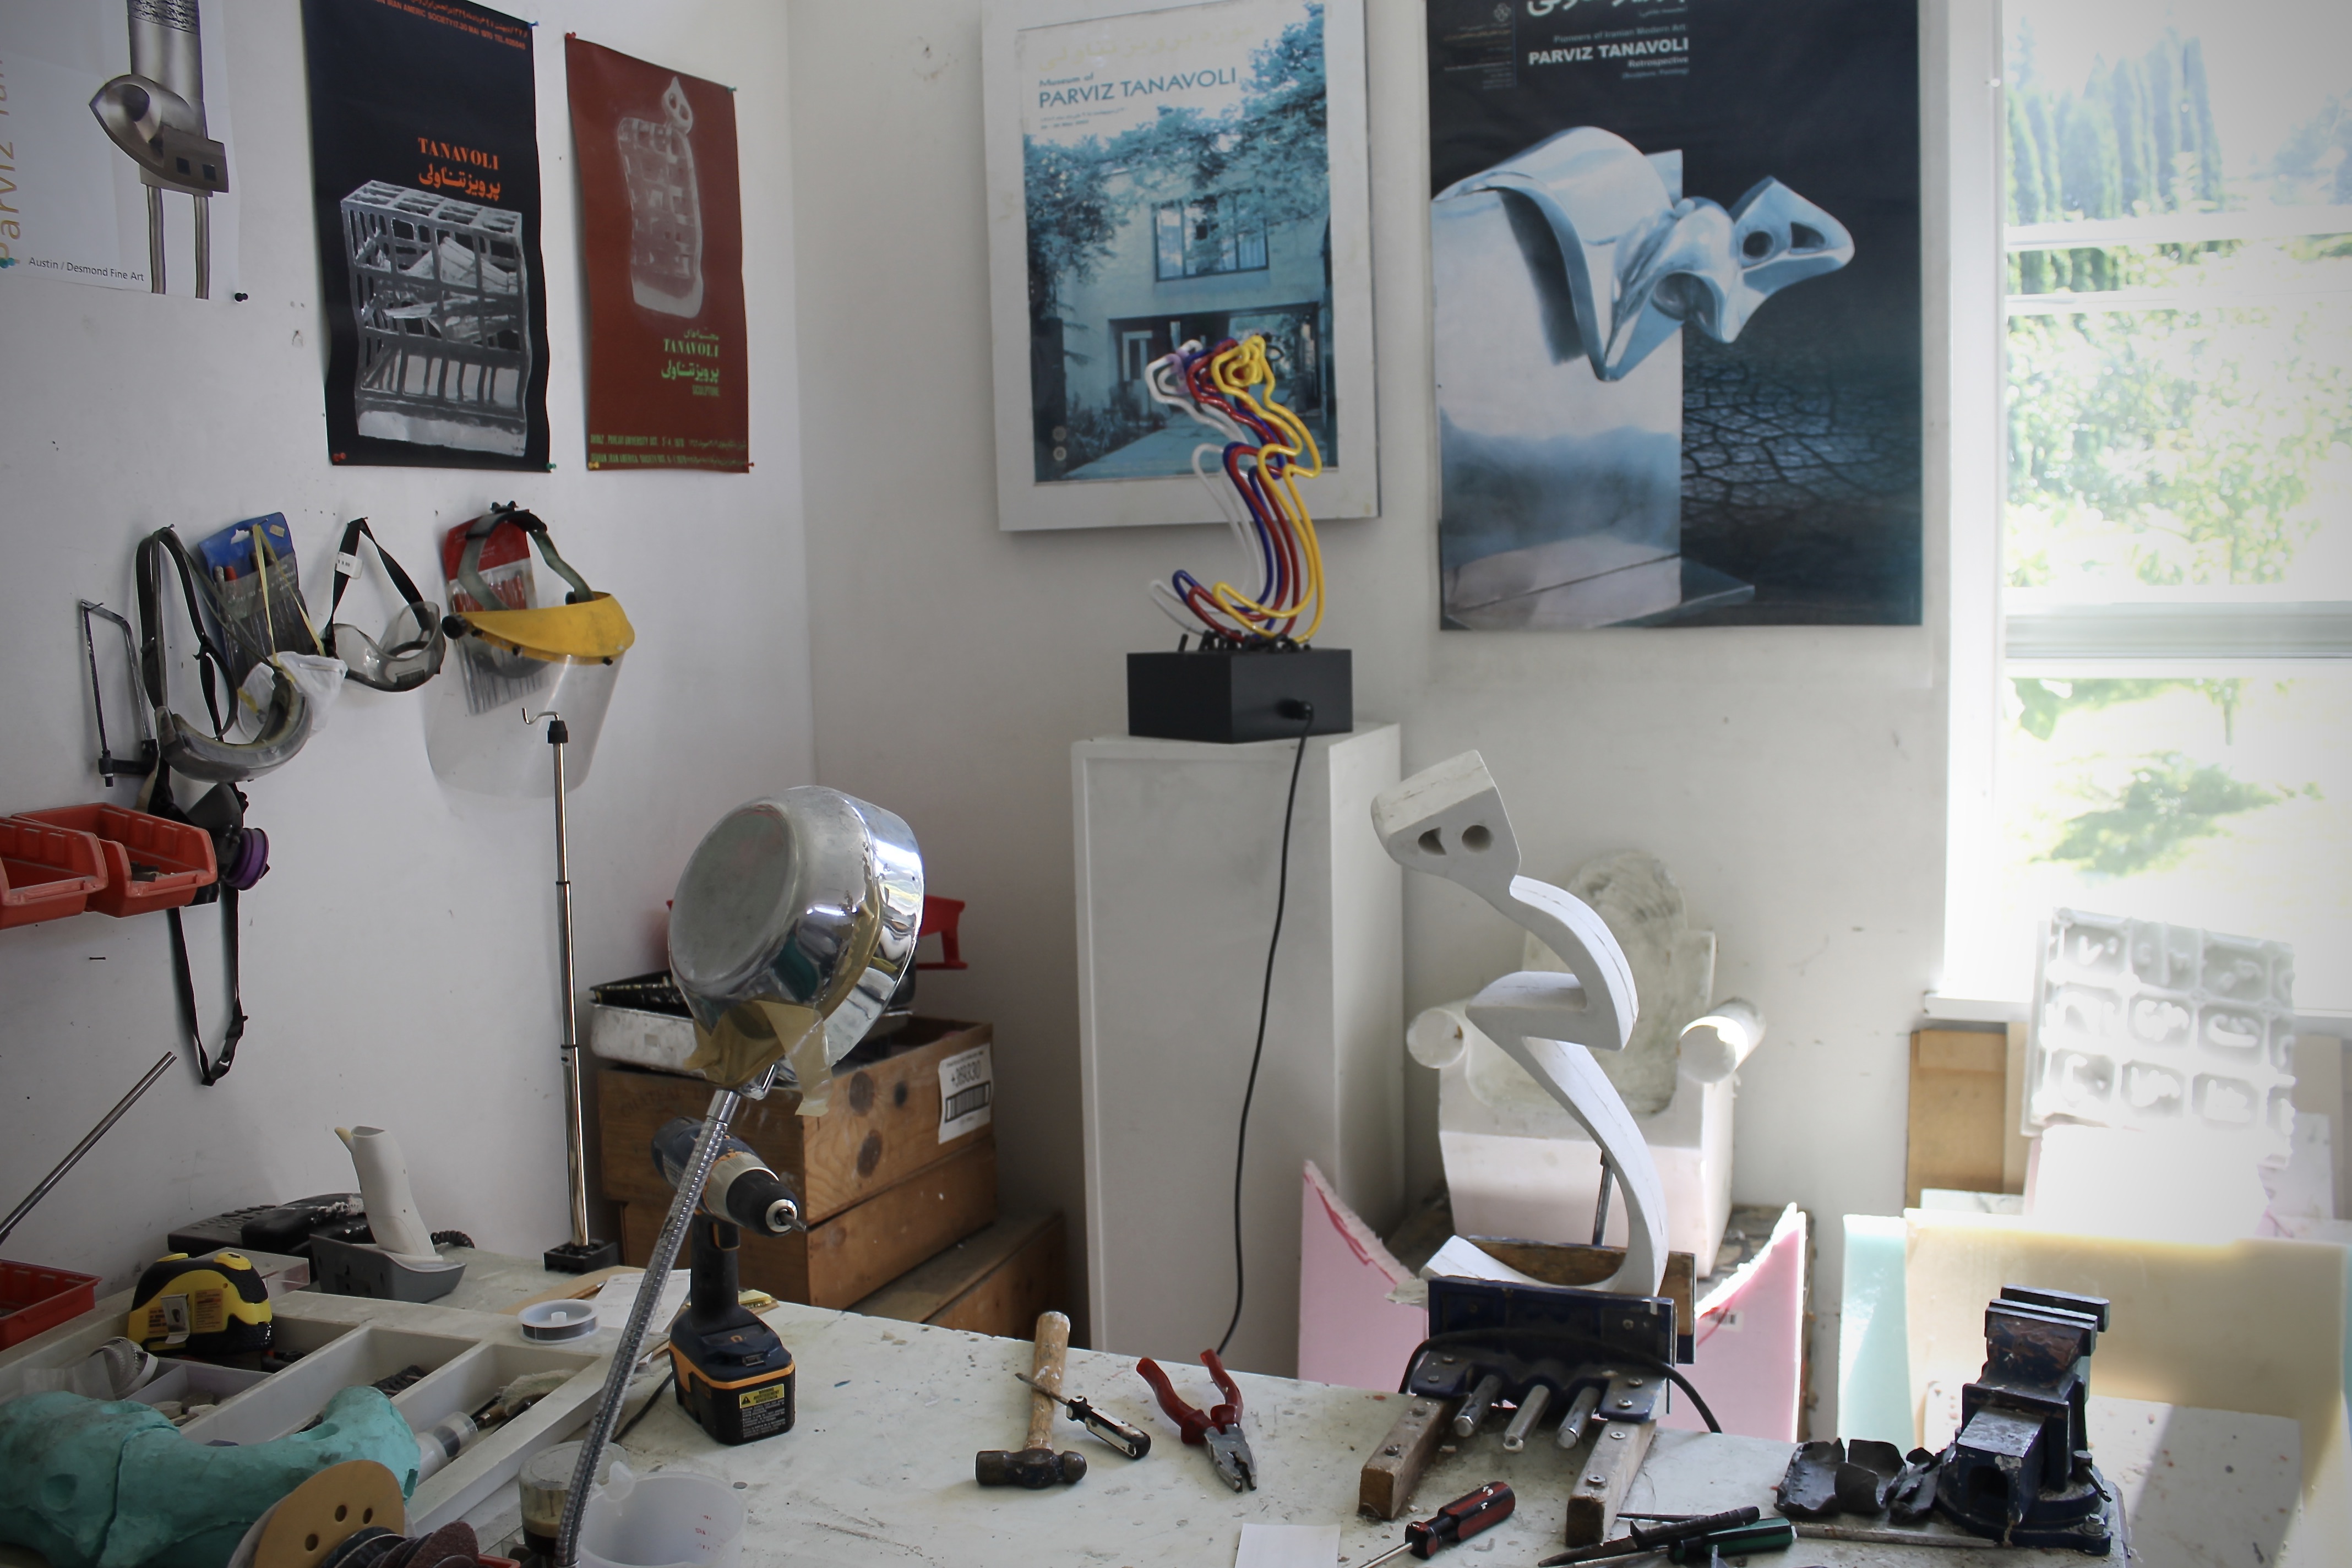 Parviz Tanavoli's studio in Horseshoe Bay (Photo by Hadani Ditmars)